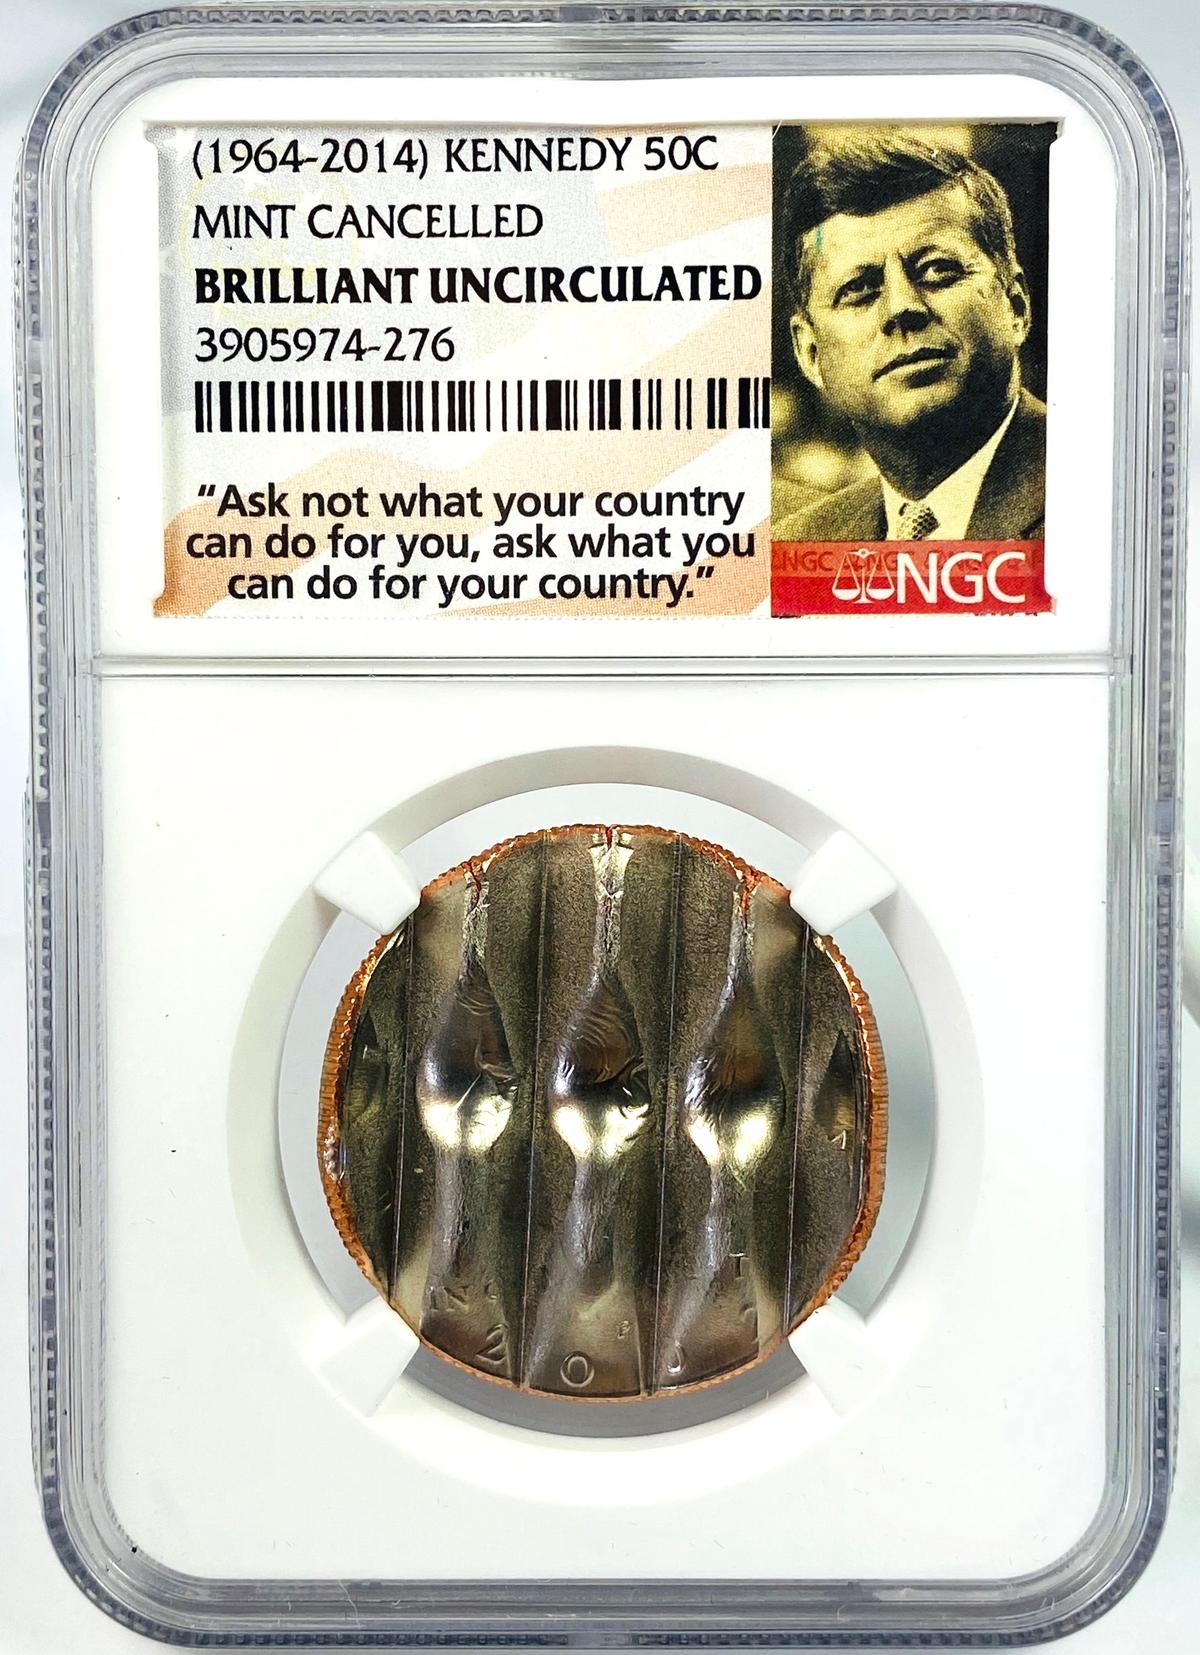 Certified Mint-cancelled die U.S. Kennedy half dollar